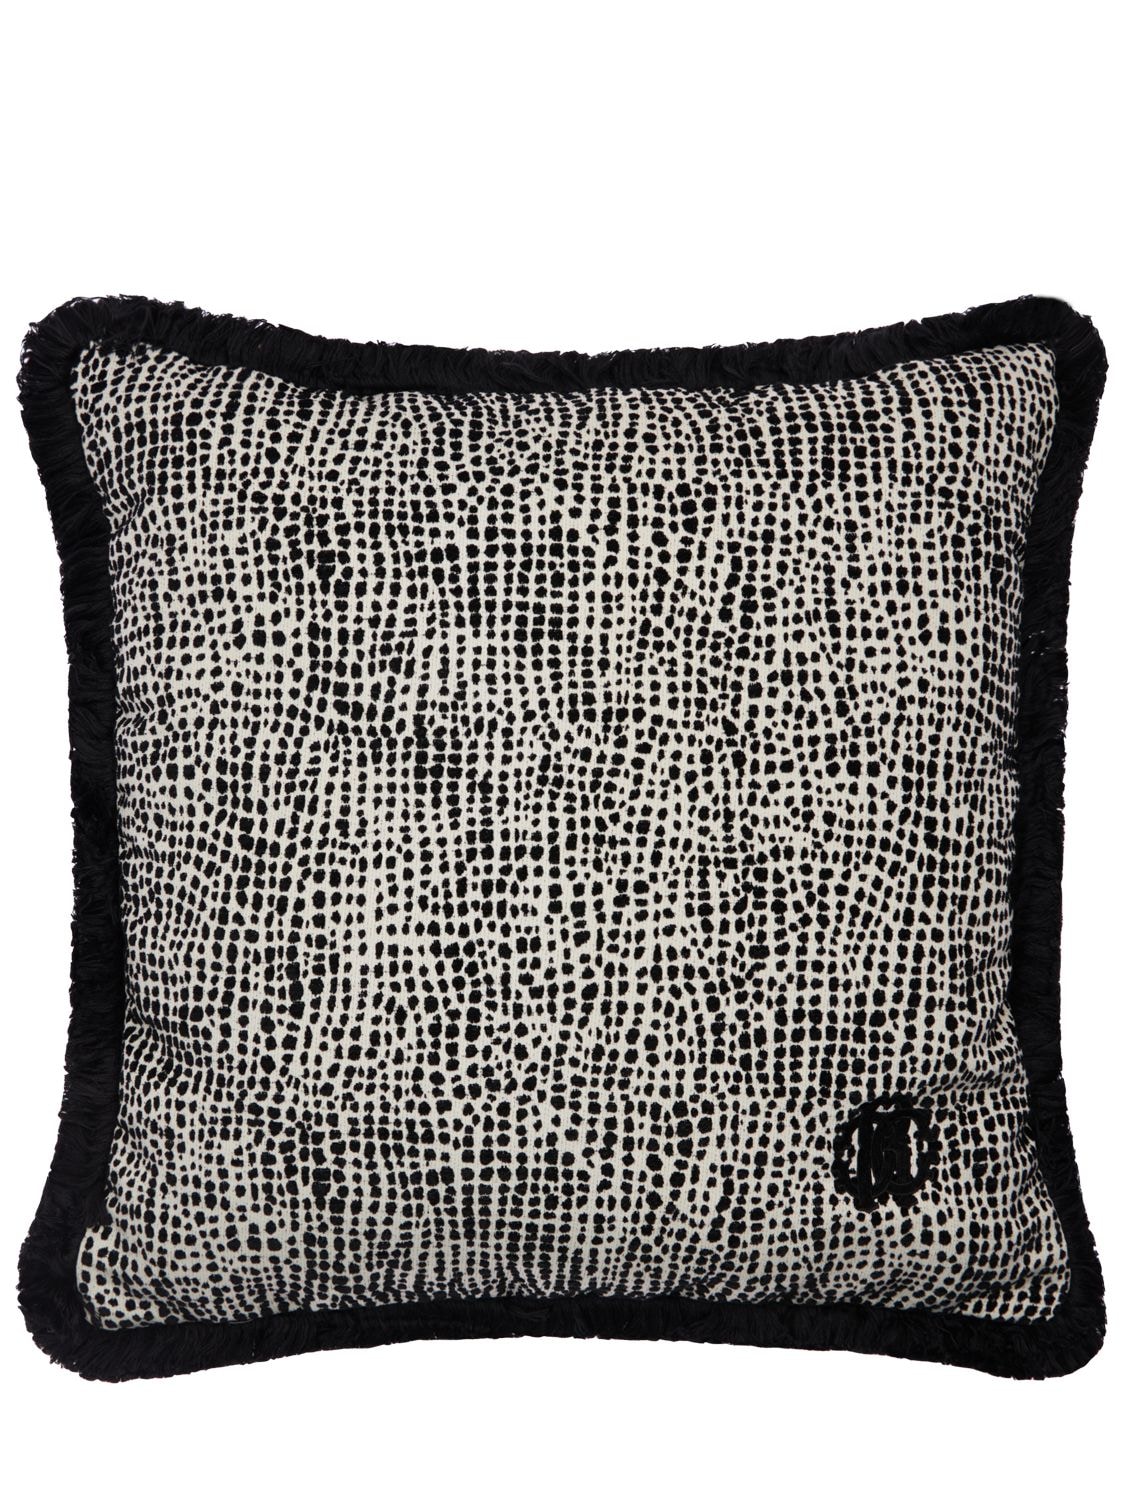 Roberto Cavalli Python Velvet Cushion In Black